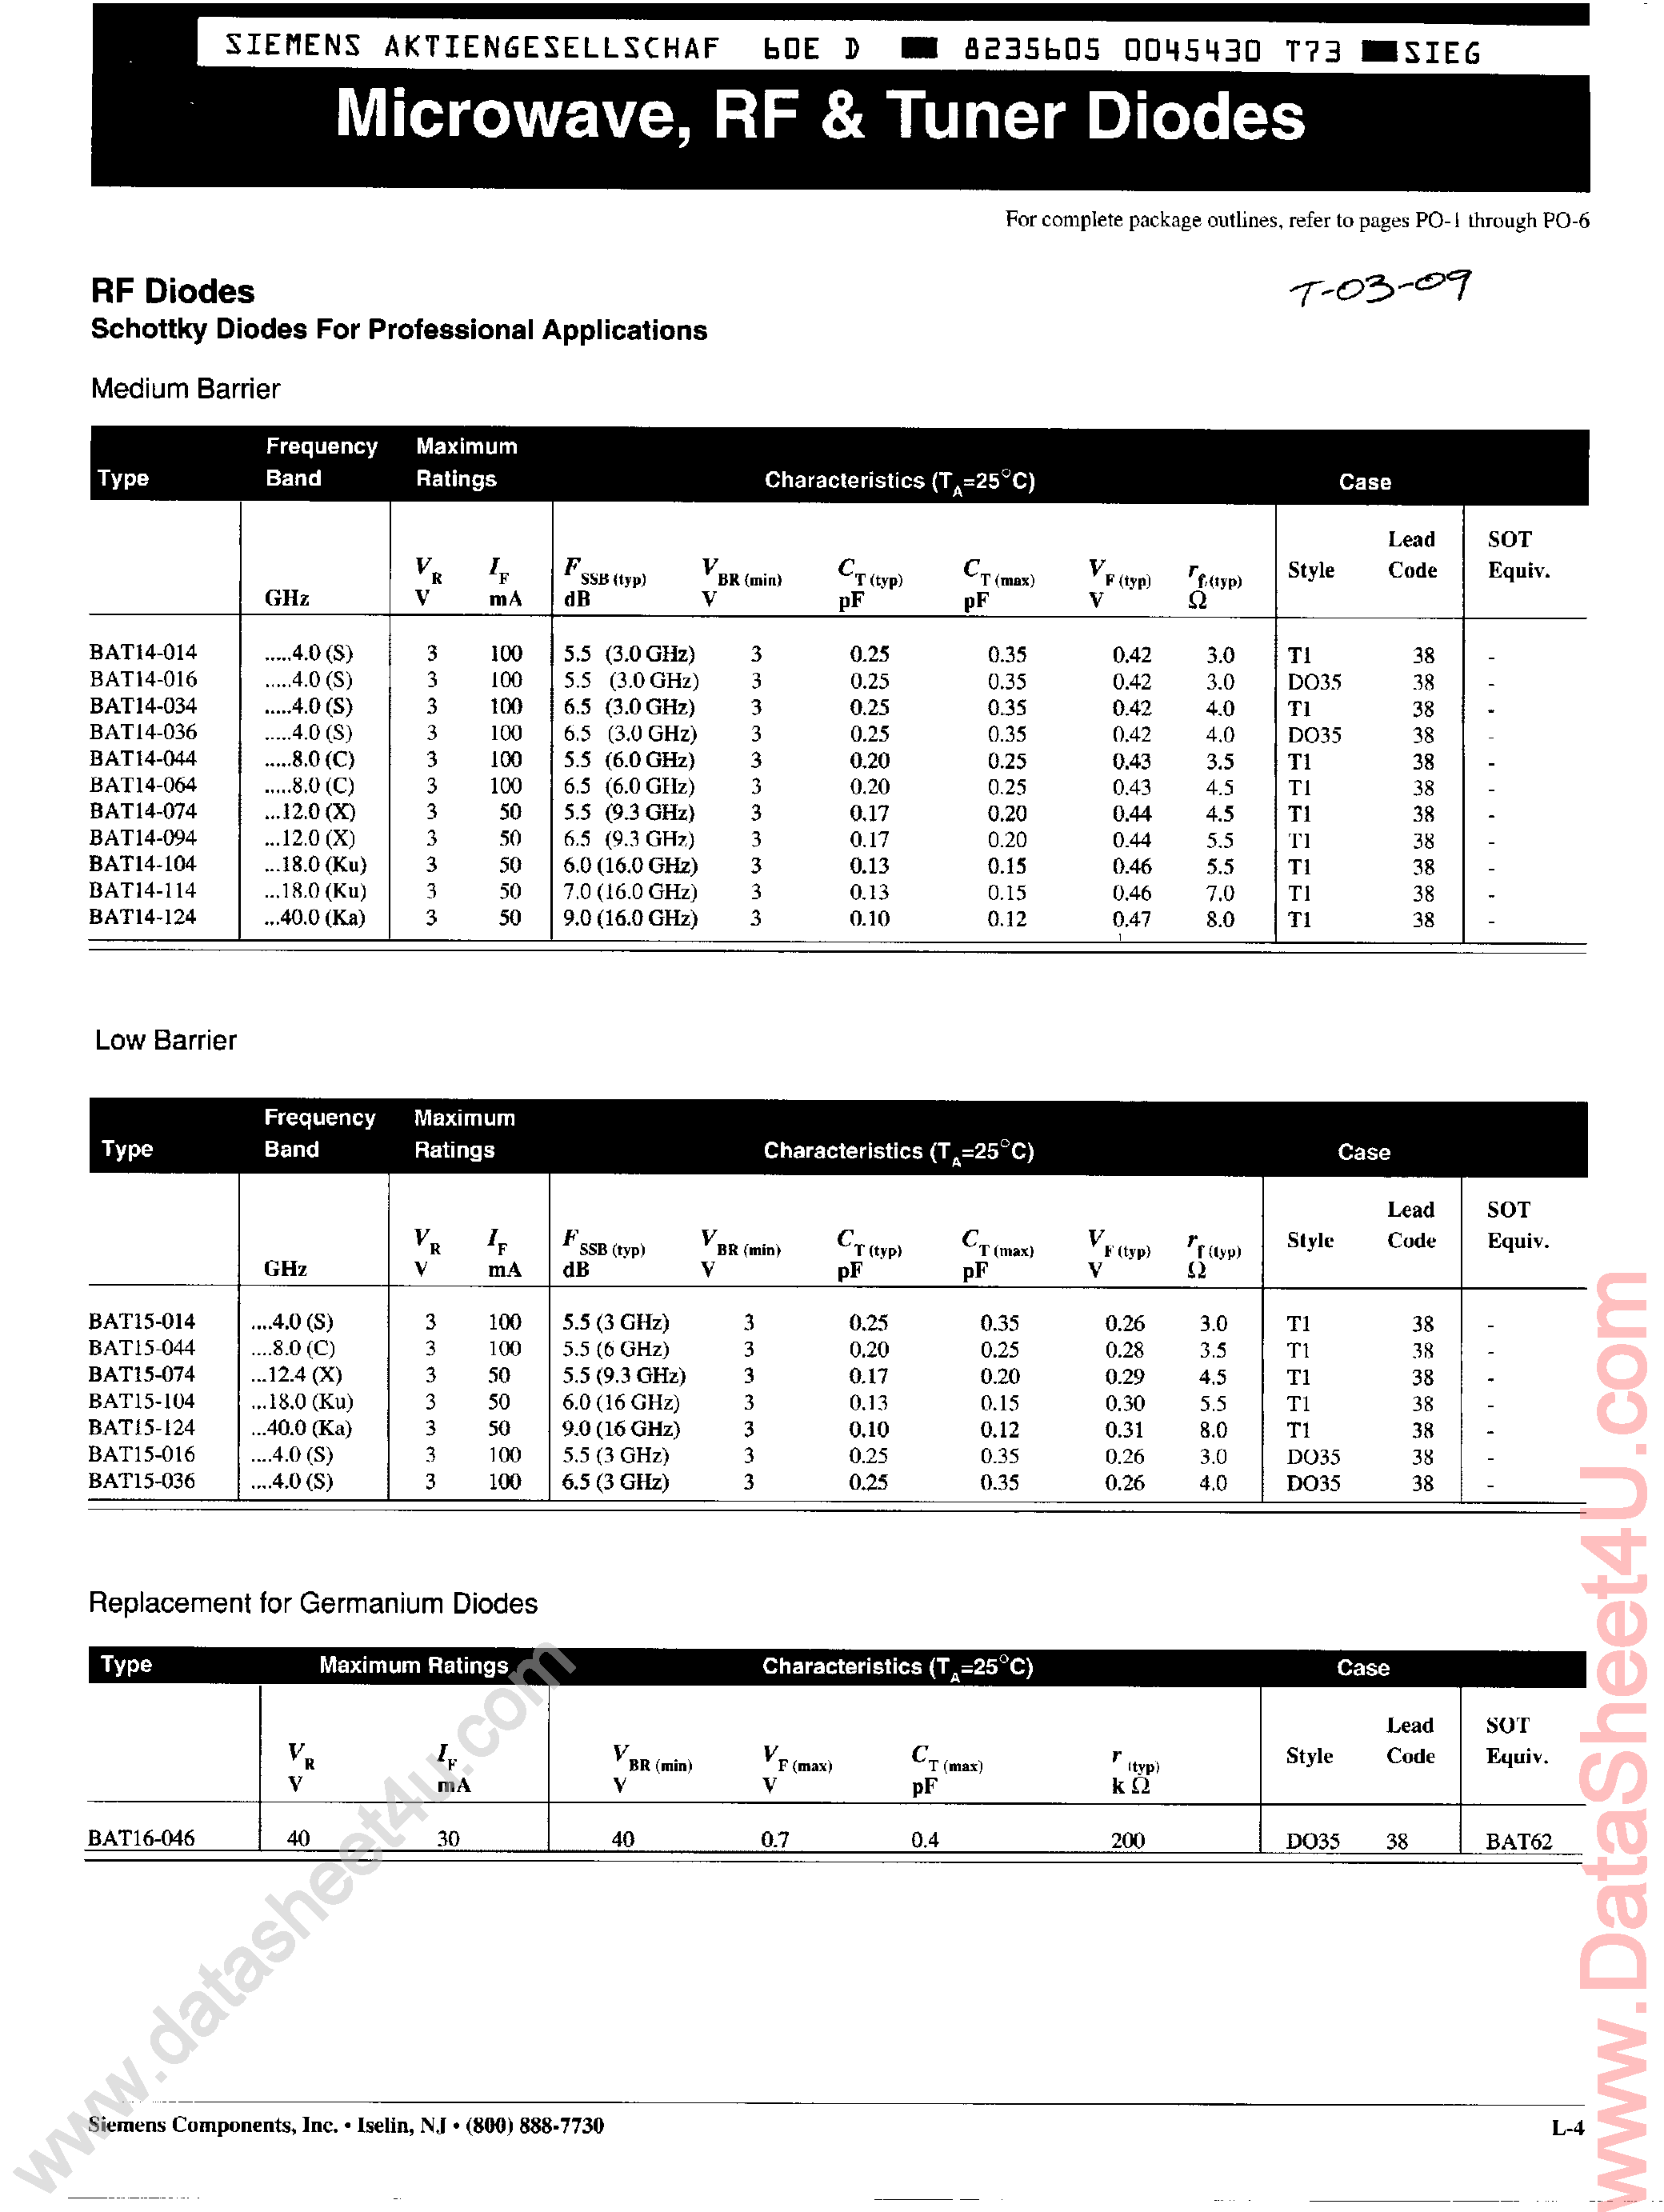 Datasheet BAT15-xxx - (BATxx-xxx) Microwave RF & Tuner Diodes page 1